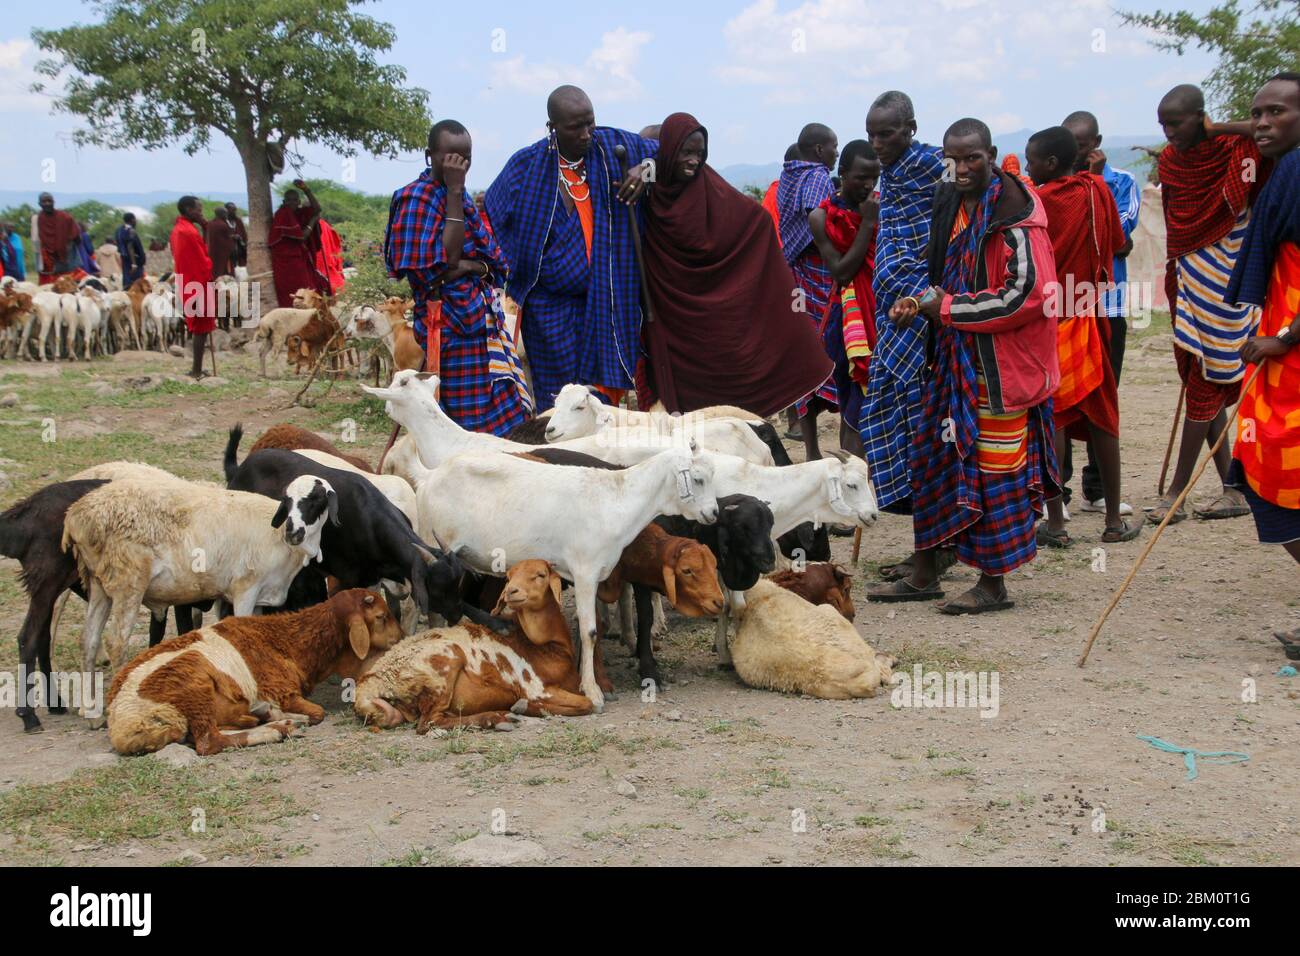 Masai (Also Maasai) Tribesmen an ethnic group of semi-nomadic people. Maasai men herding livestock Photographed in Tanzania Stock Photo